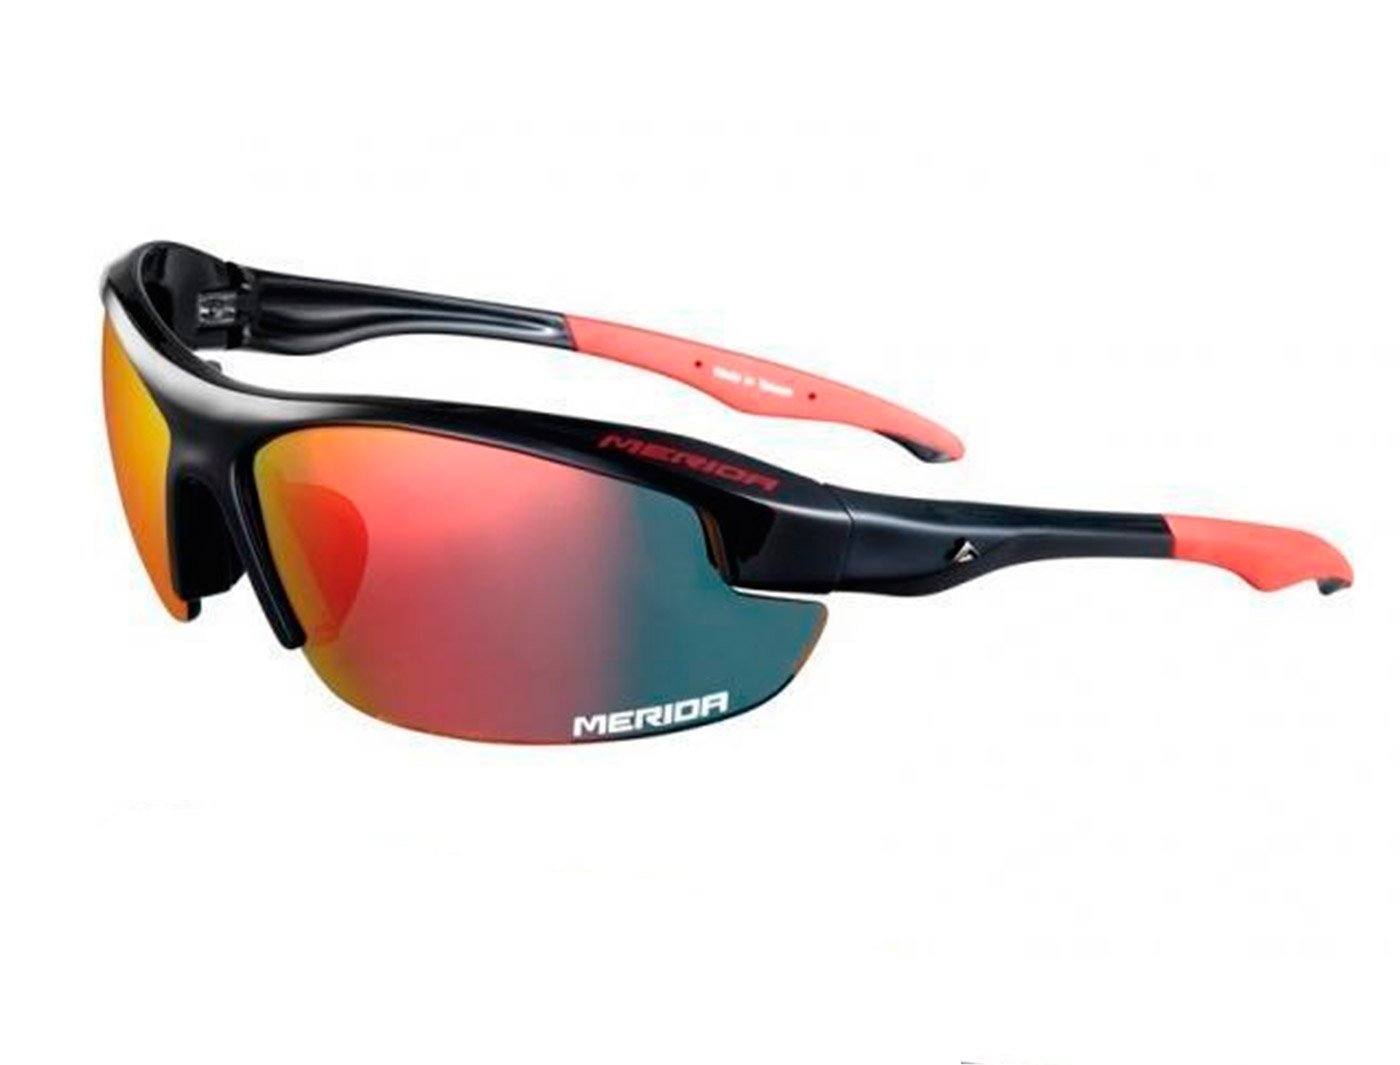 Очки велосипедные, Merida Sport Edition Sunglasses Shiny blackRed, сменные линзы, 2313001088 очки велосипедные mighty rayon flex4 солнцезащитные чехол сменные линзы 5 710138